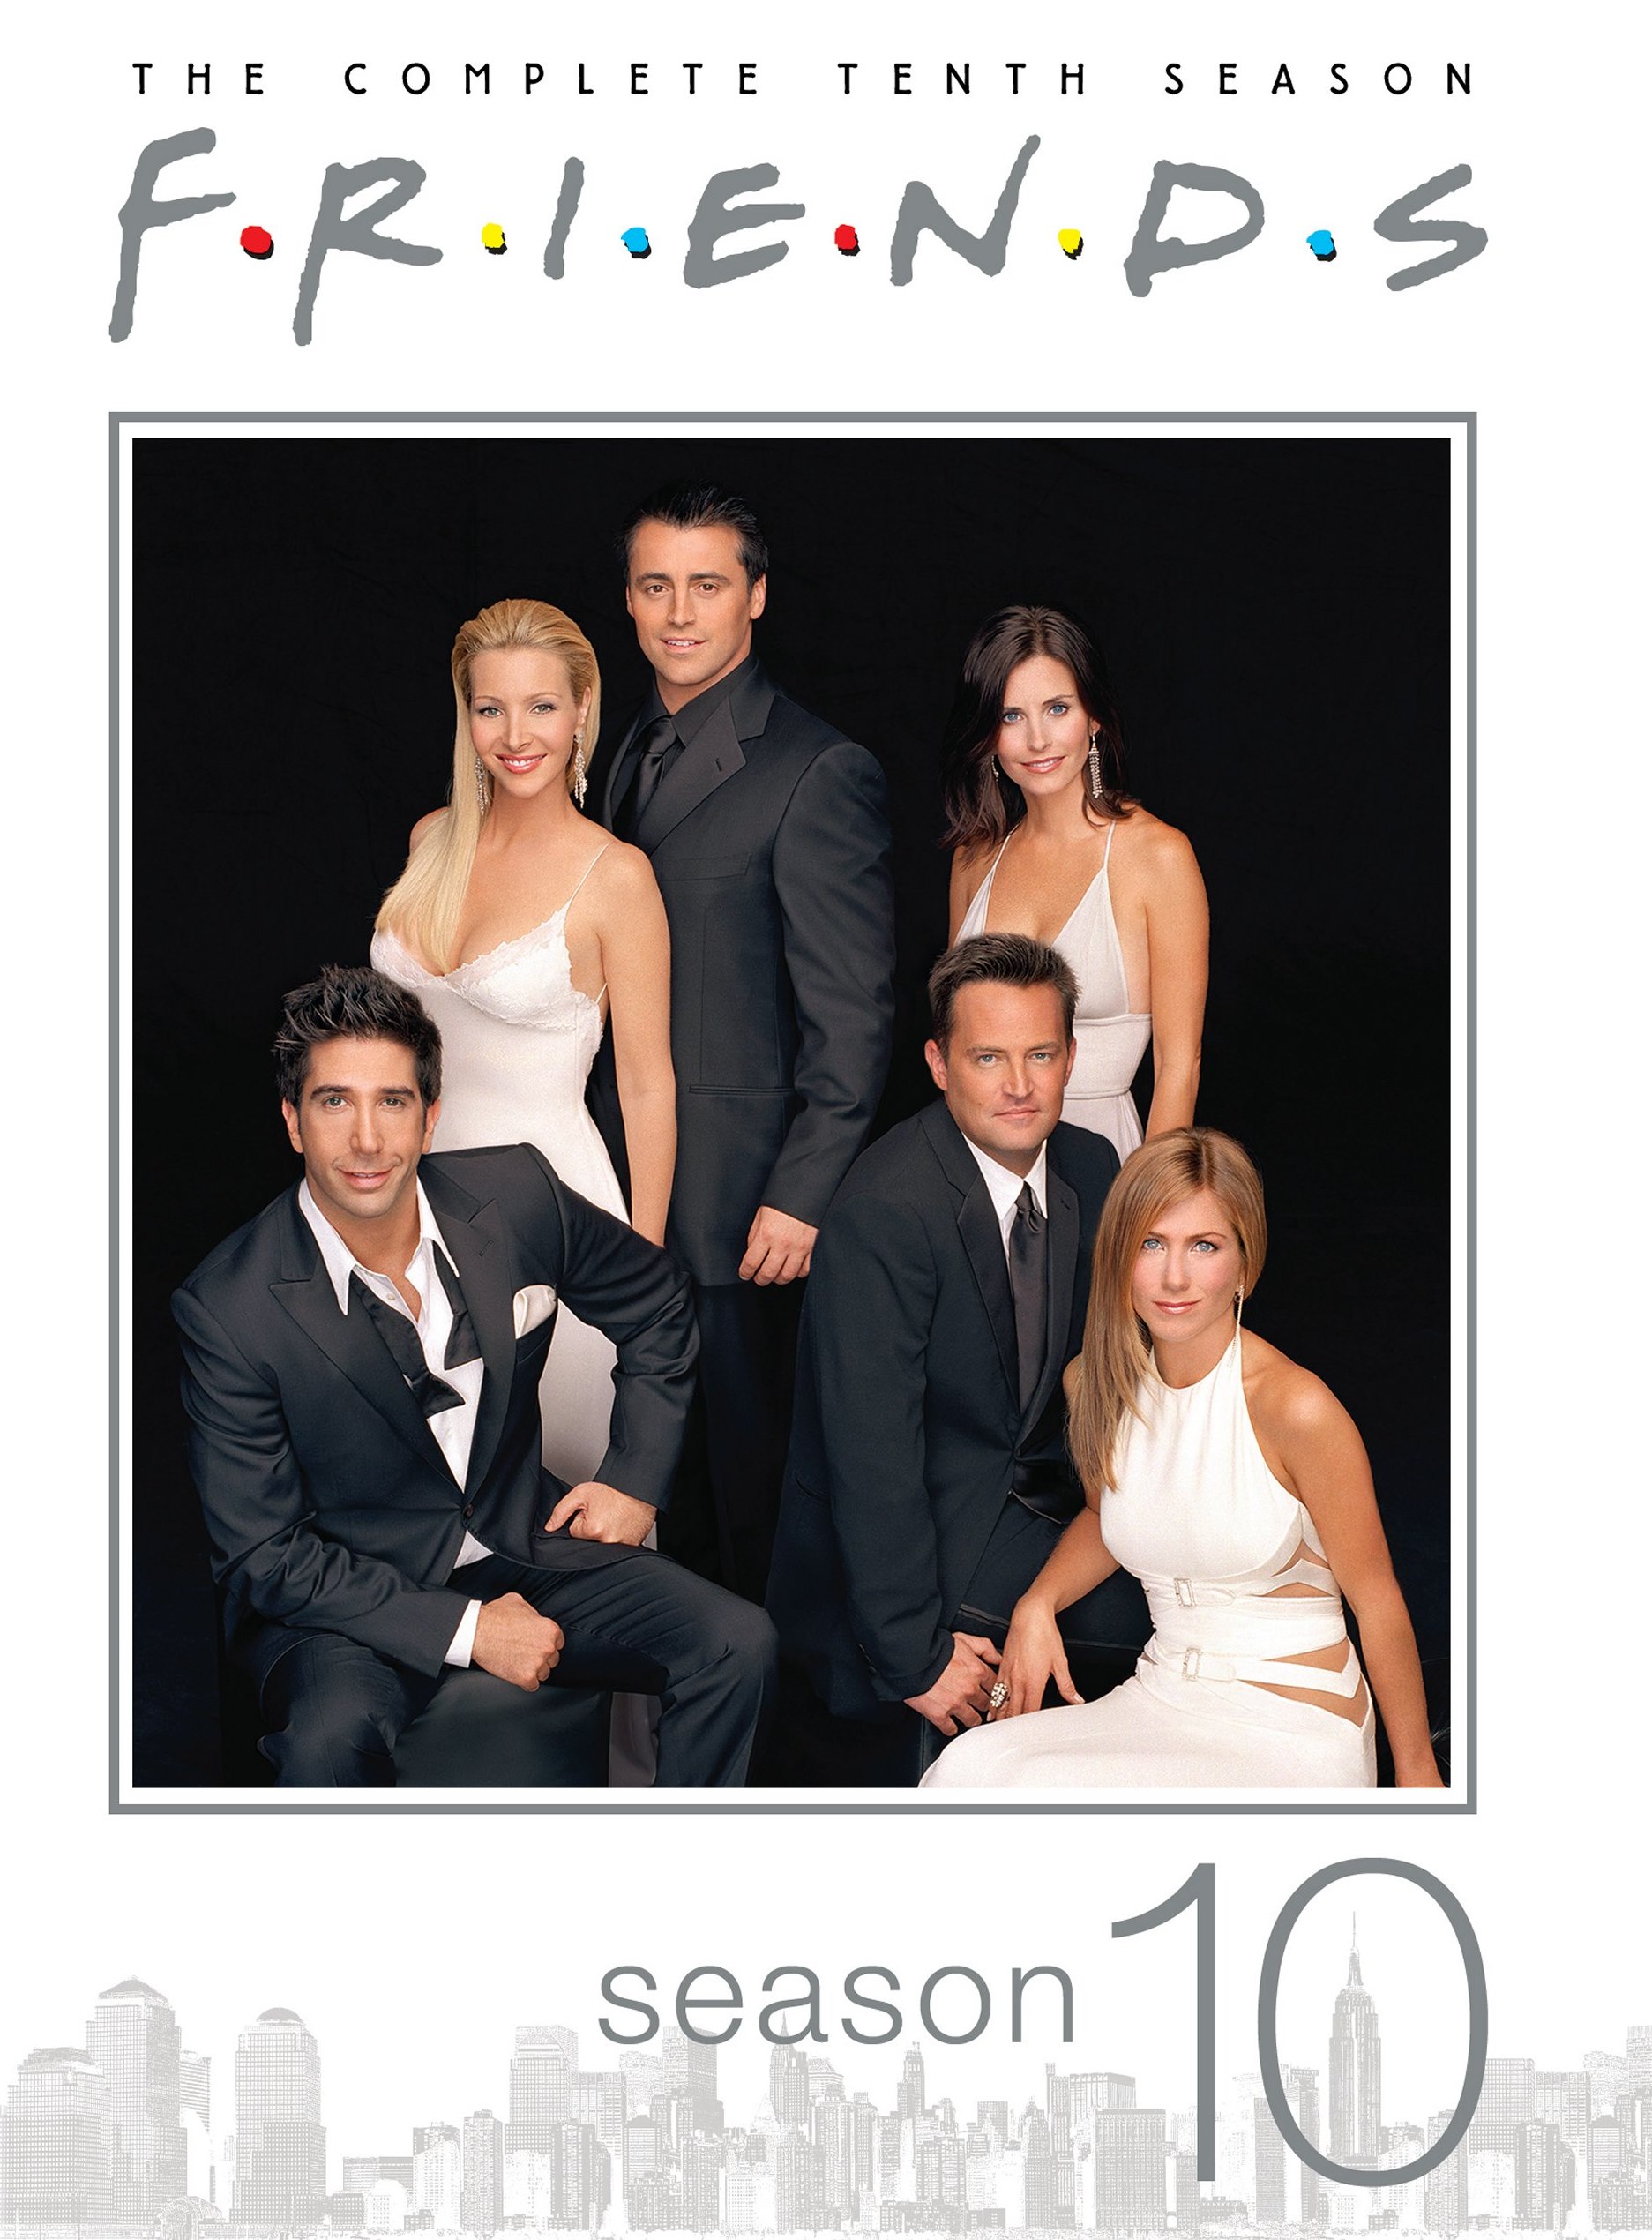 Friends: The Complete Tenth Season [DVD] - Best Buy